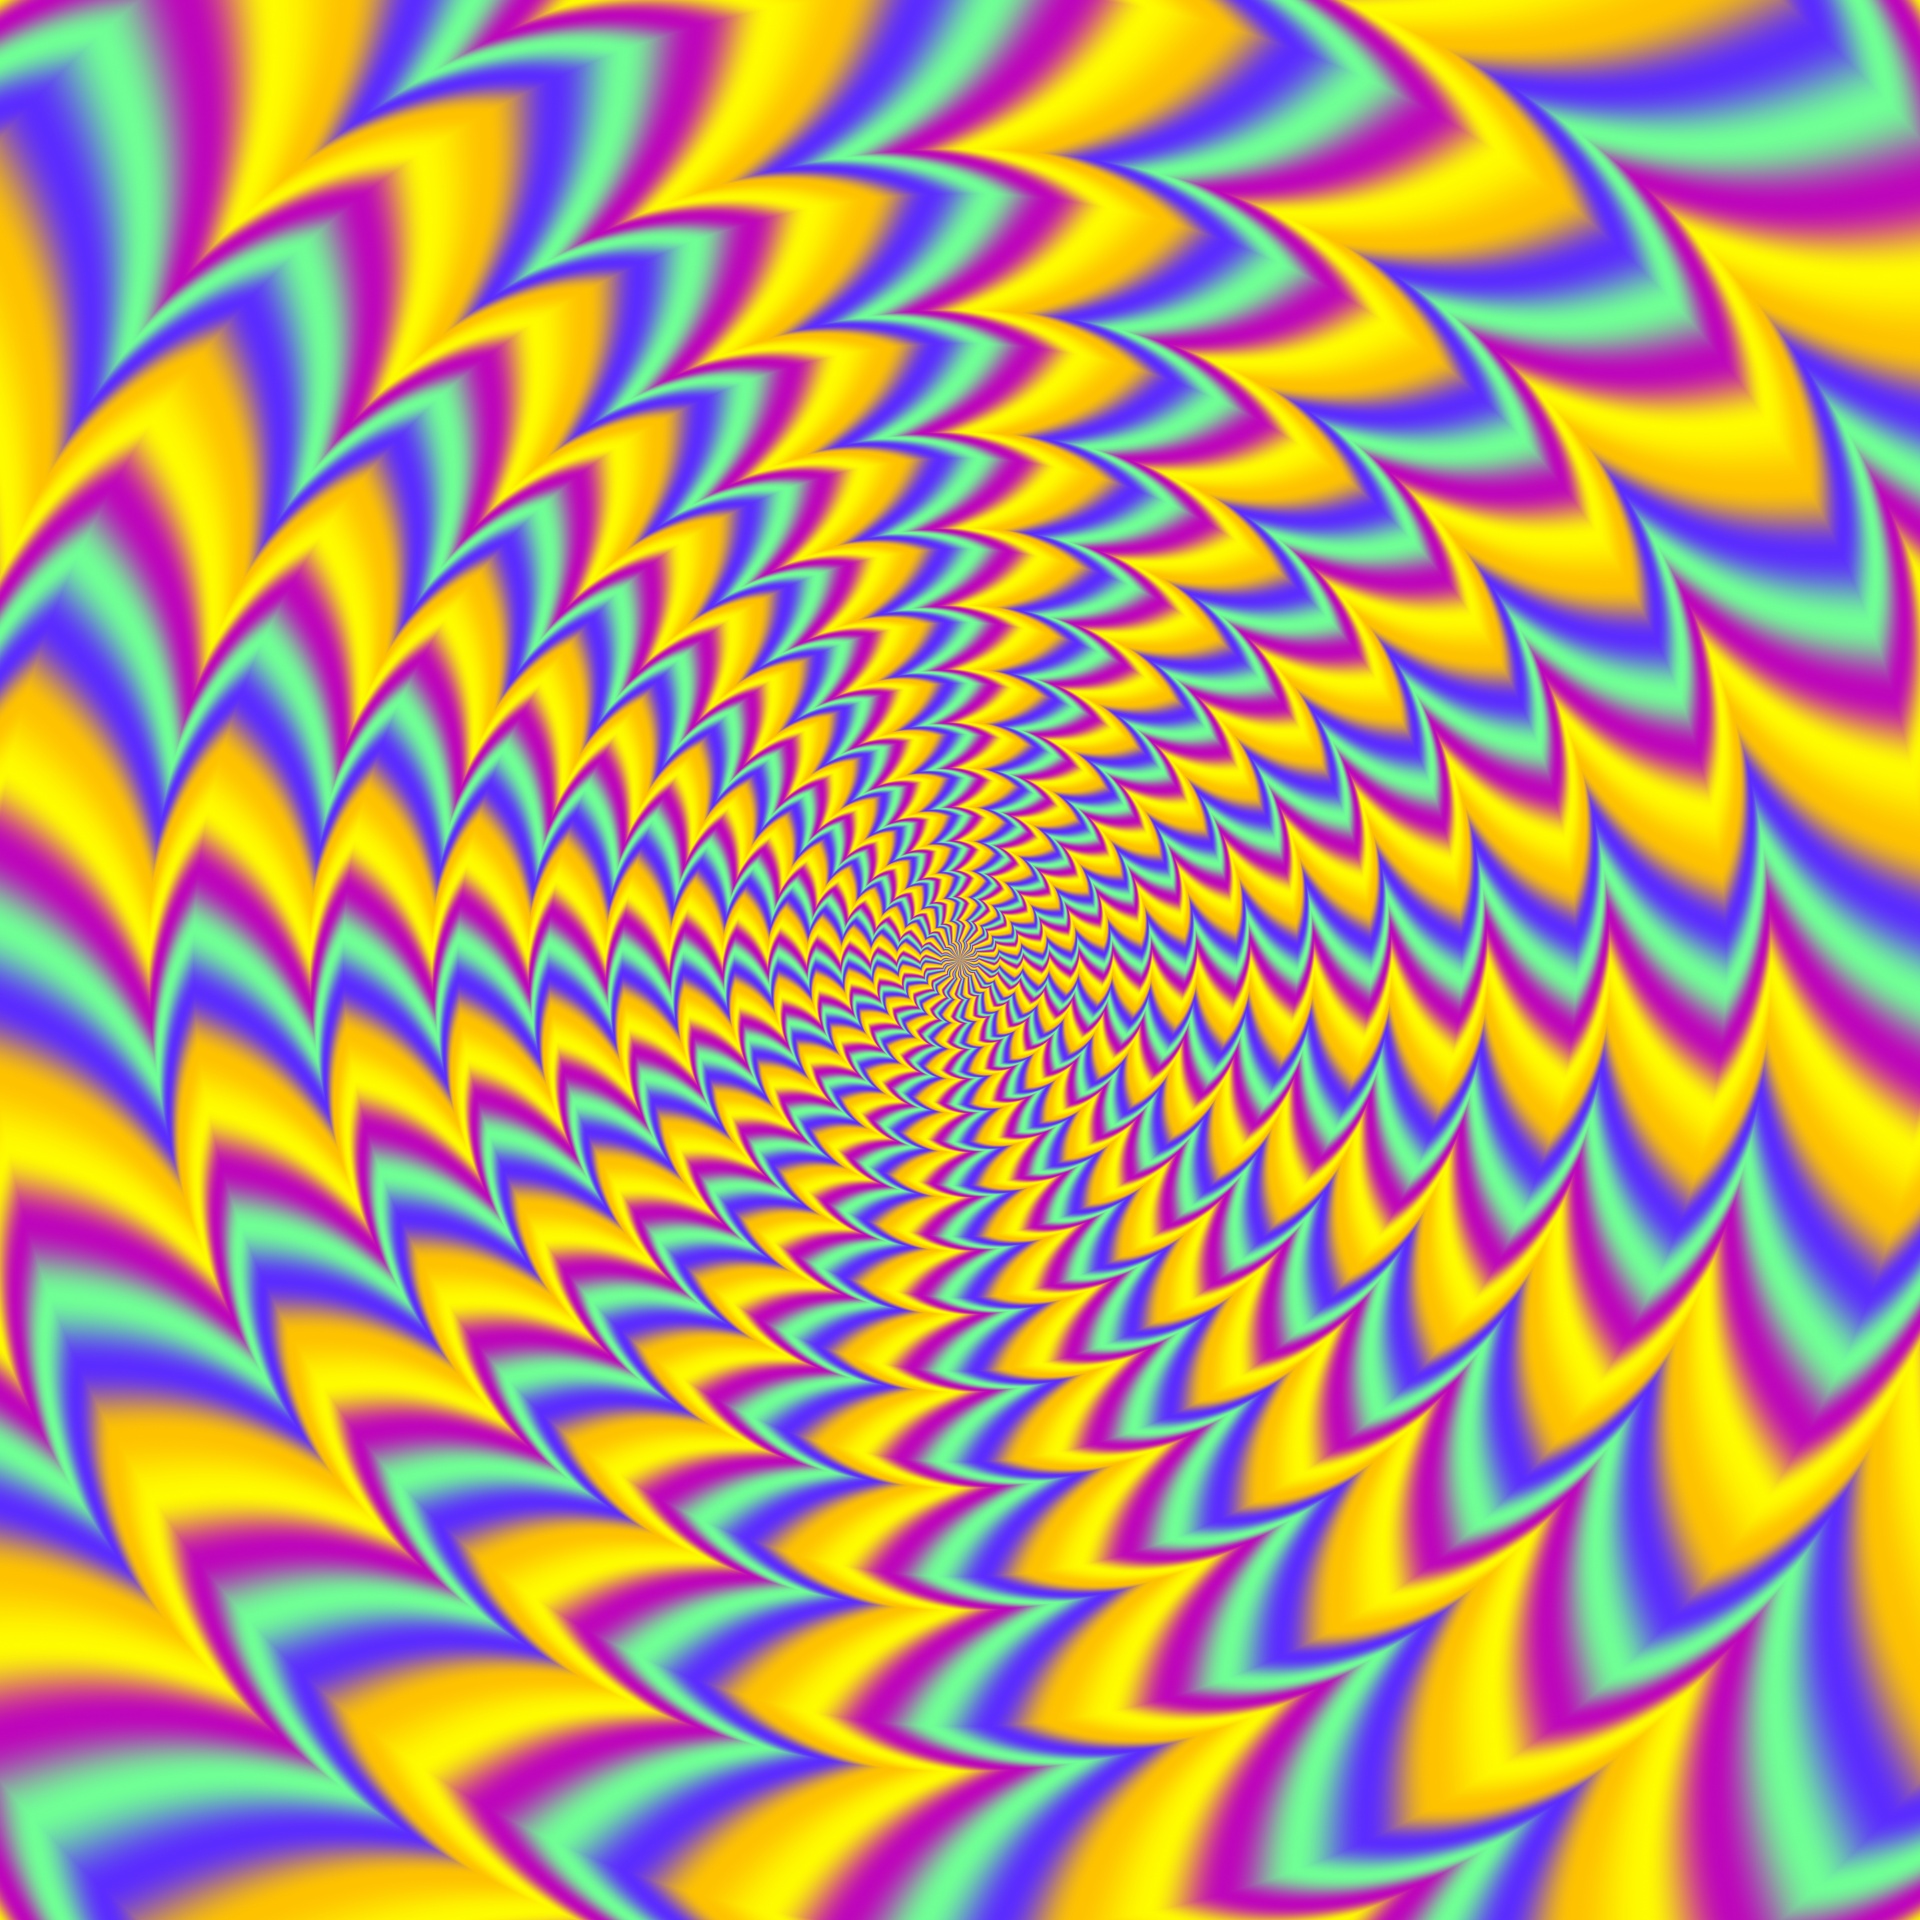 Illusion optical illusion movement retro pattern background colorful multicolored rainbow colors stripes center center sunburst